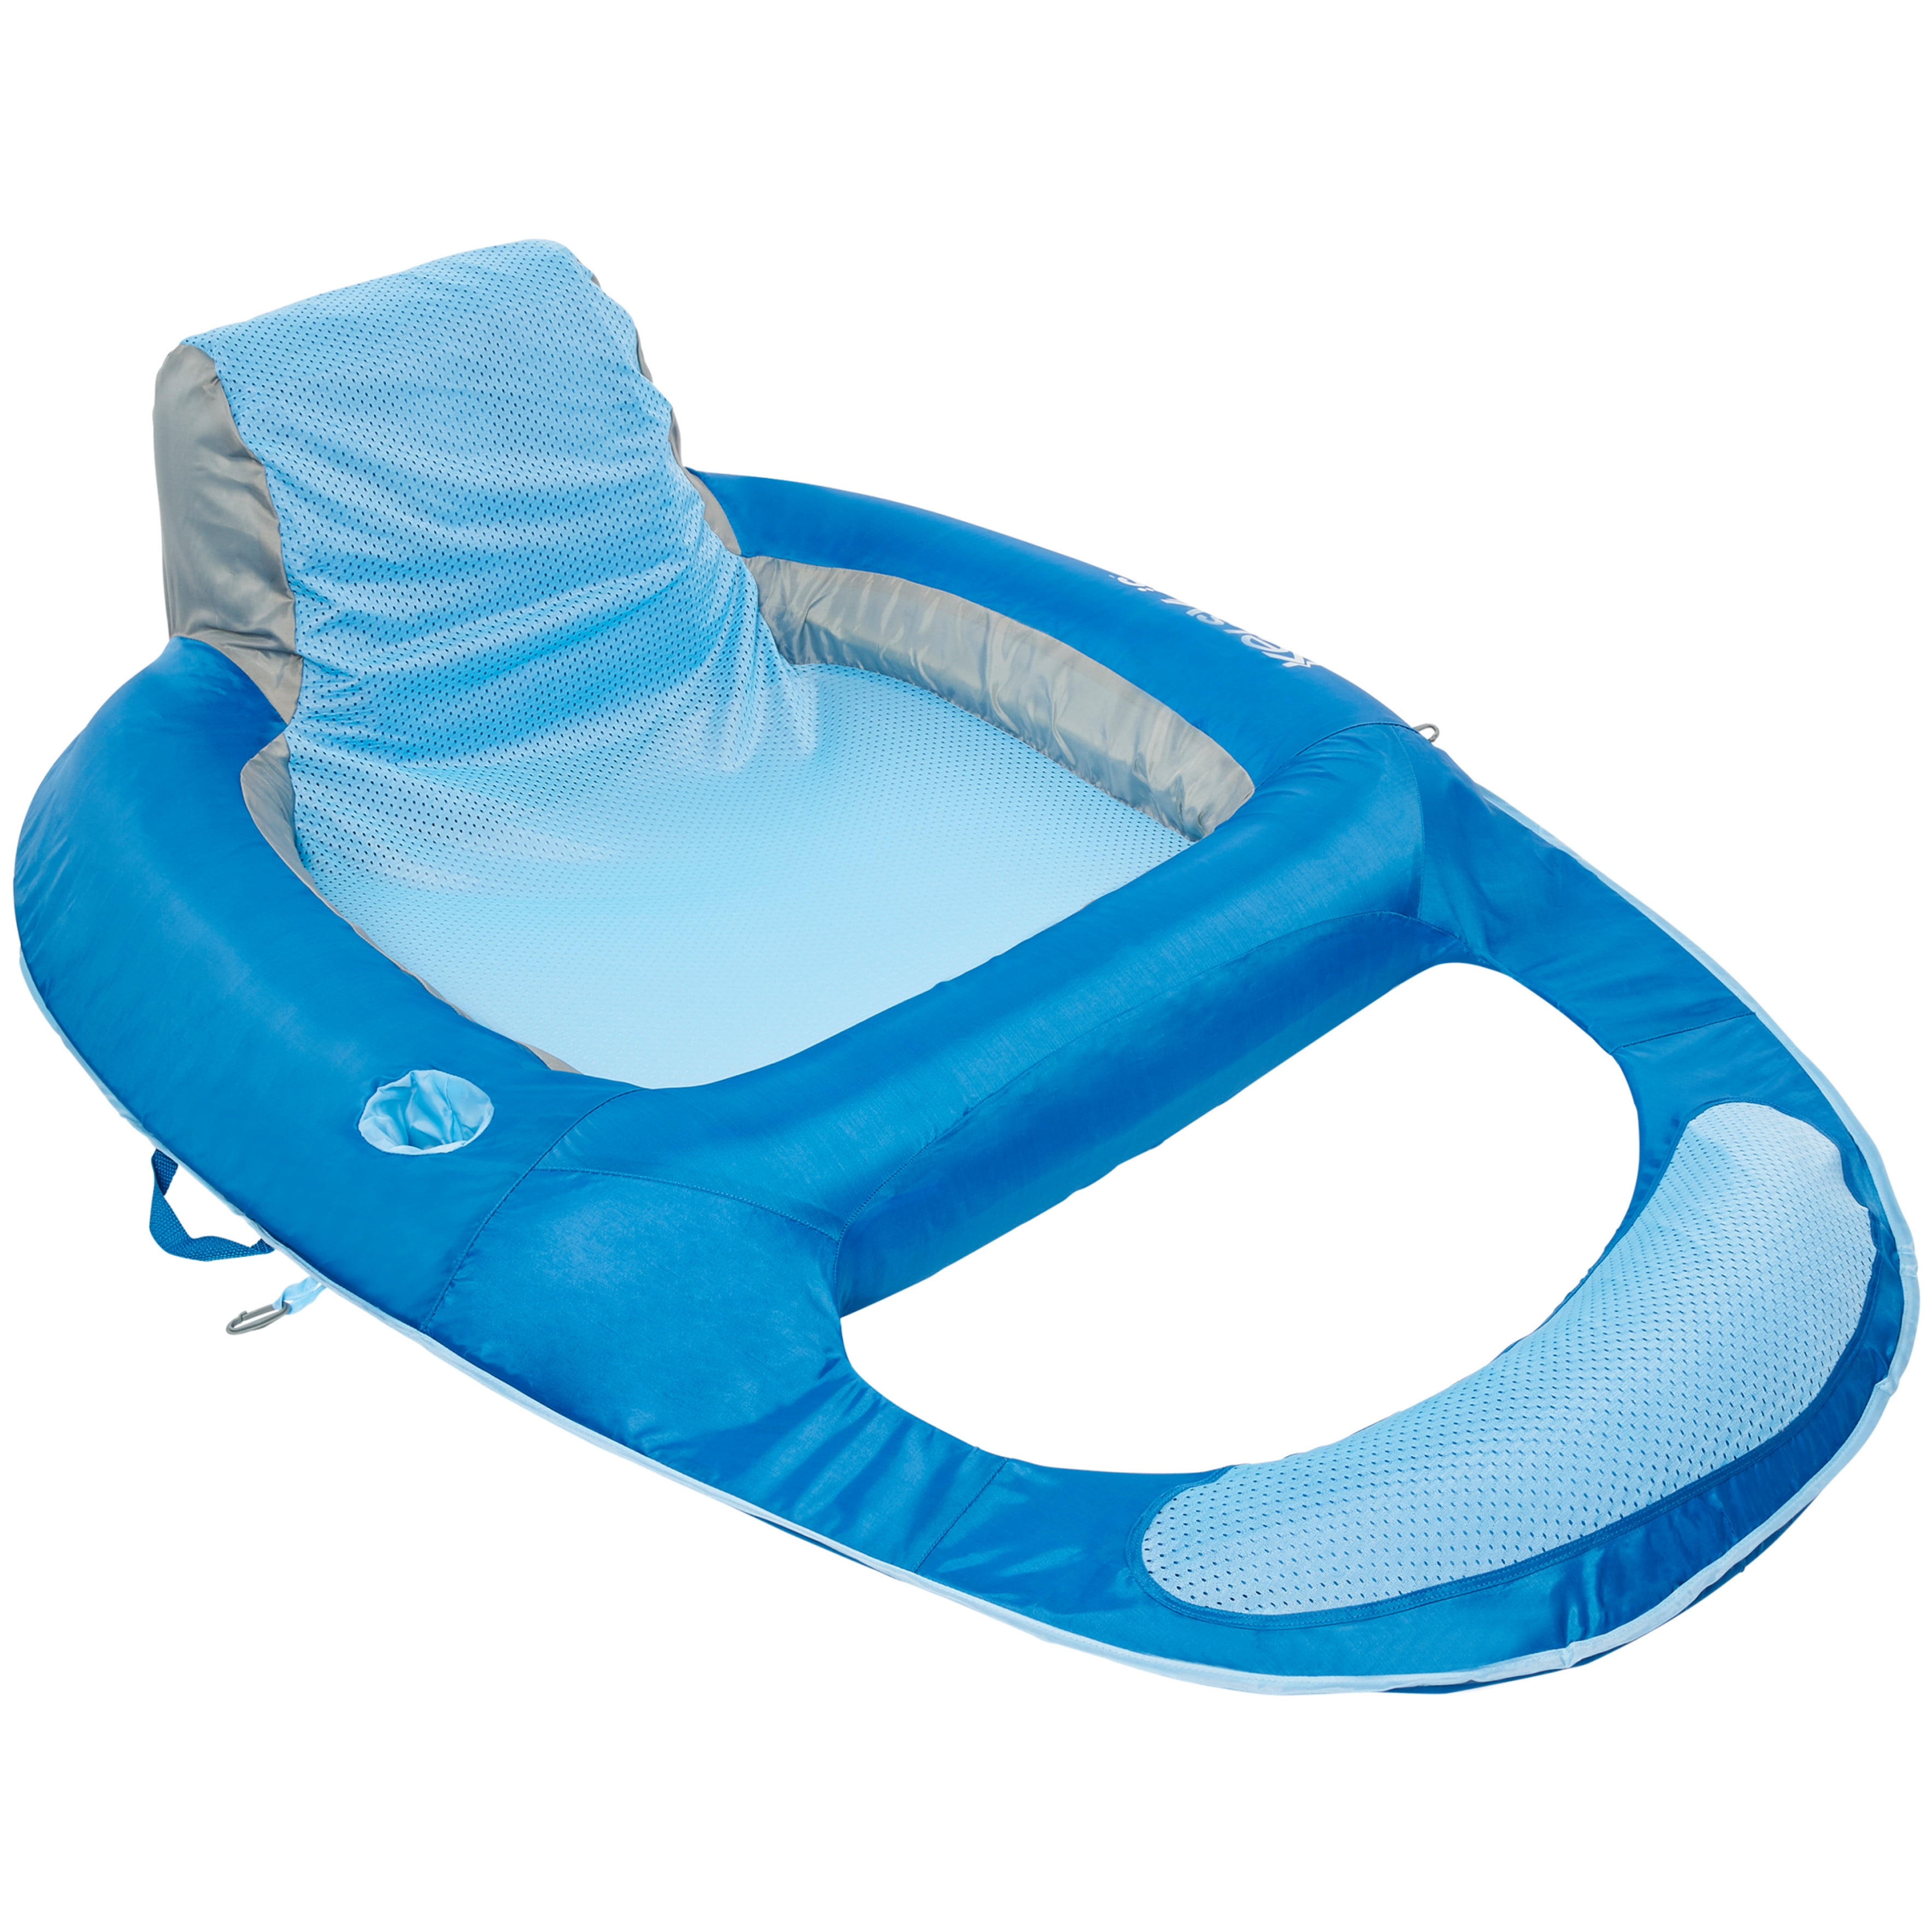 Kelsyus Floating Hammock Inflatable Swimming Pool Float Lounger Raft Blue 